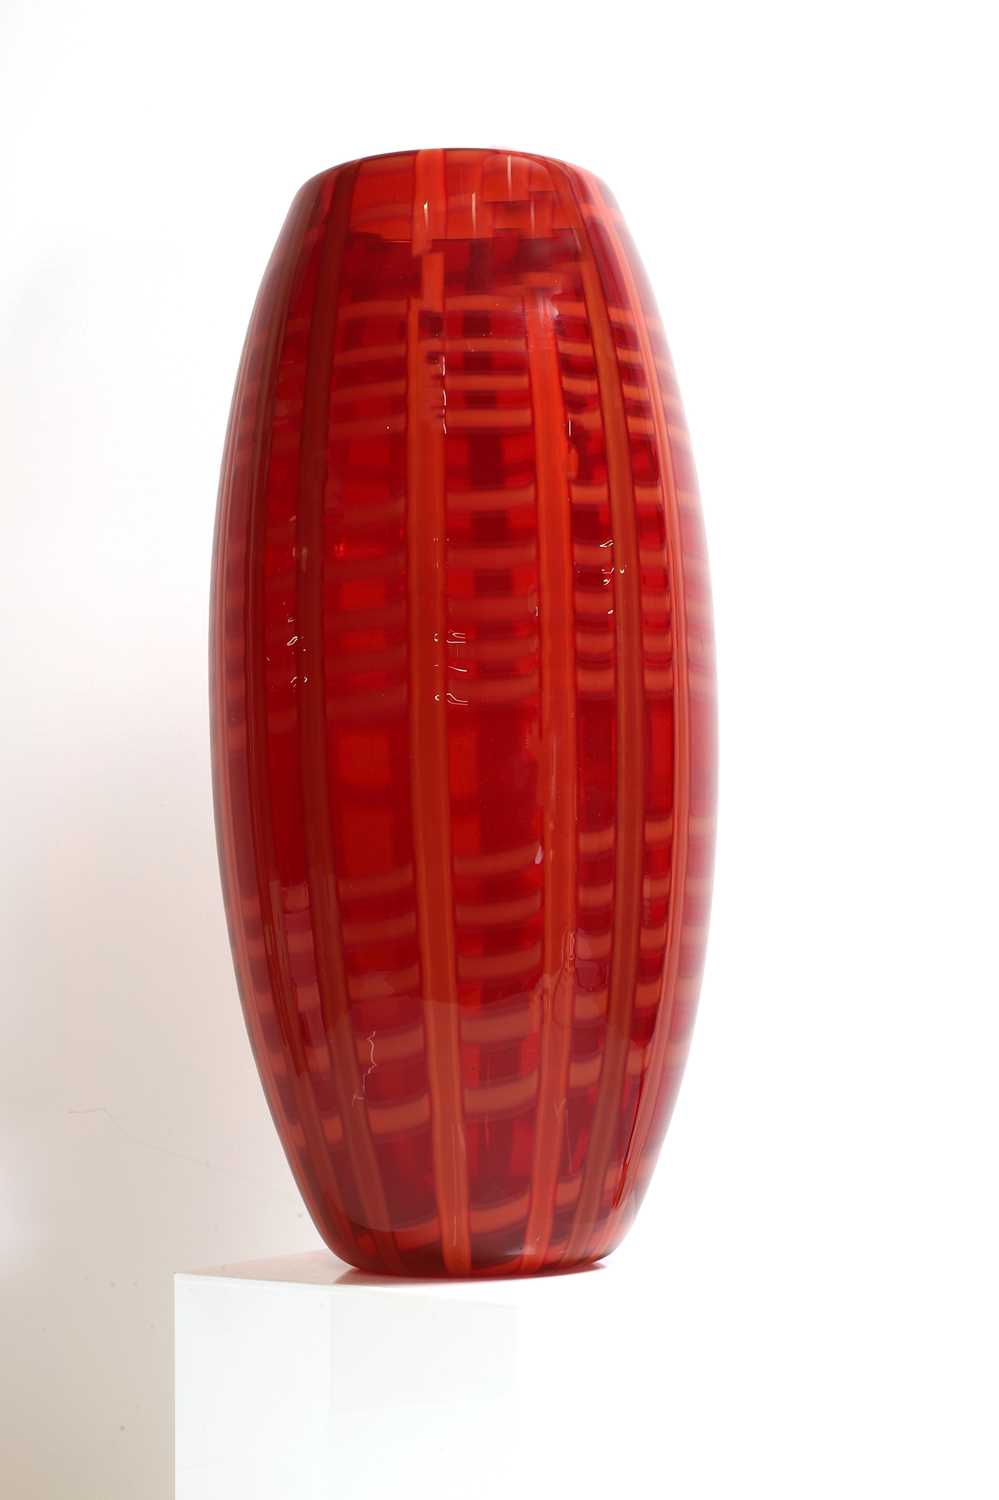 An Italian Murano glass vase, - Image 4 of 7